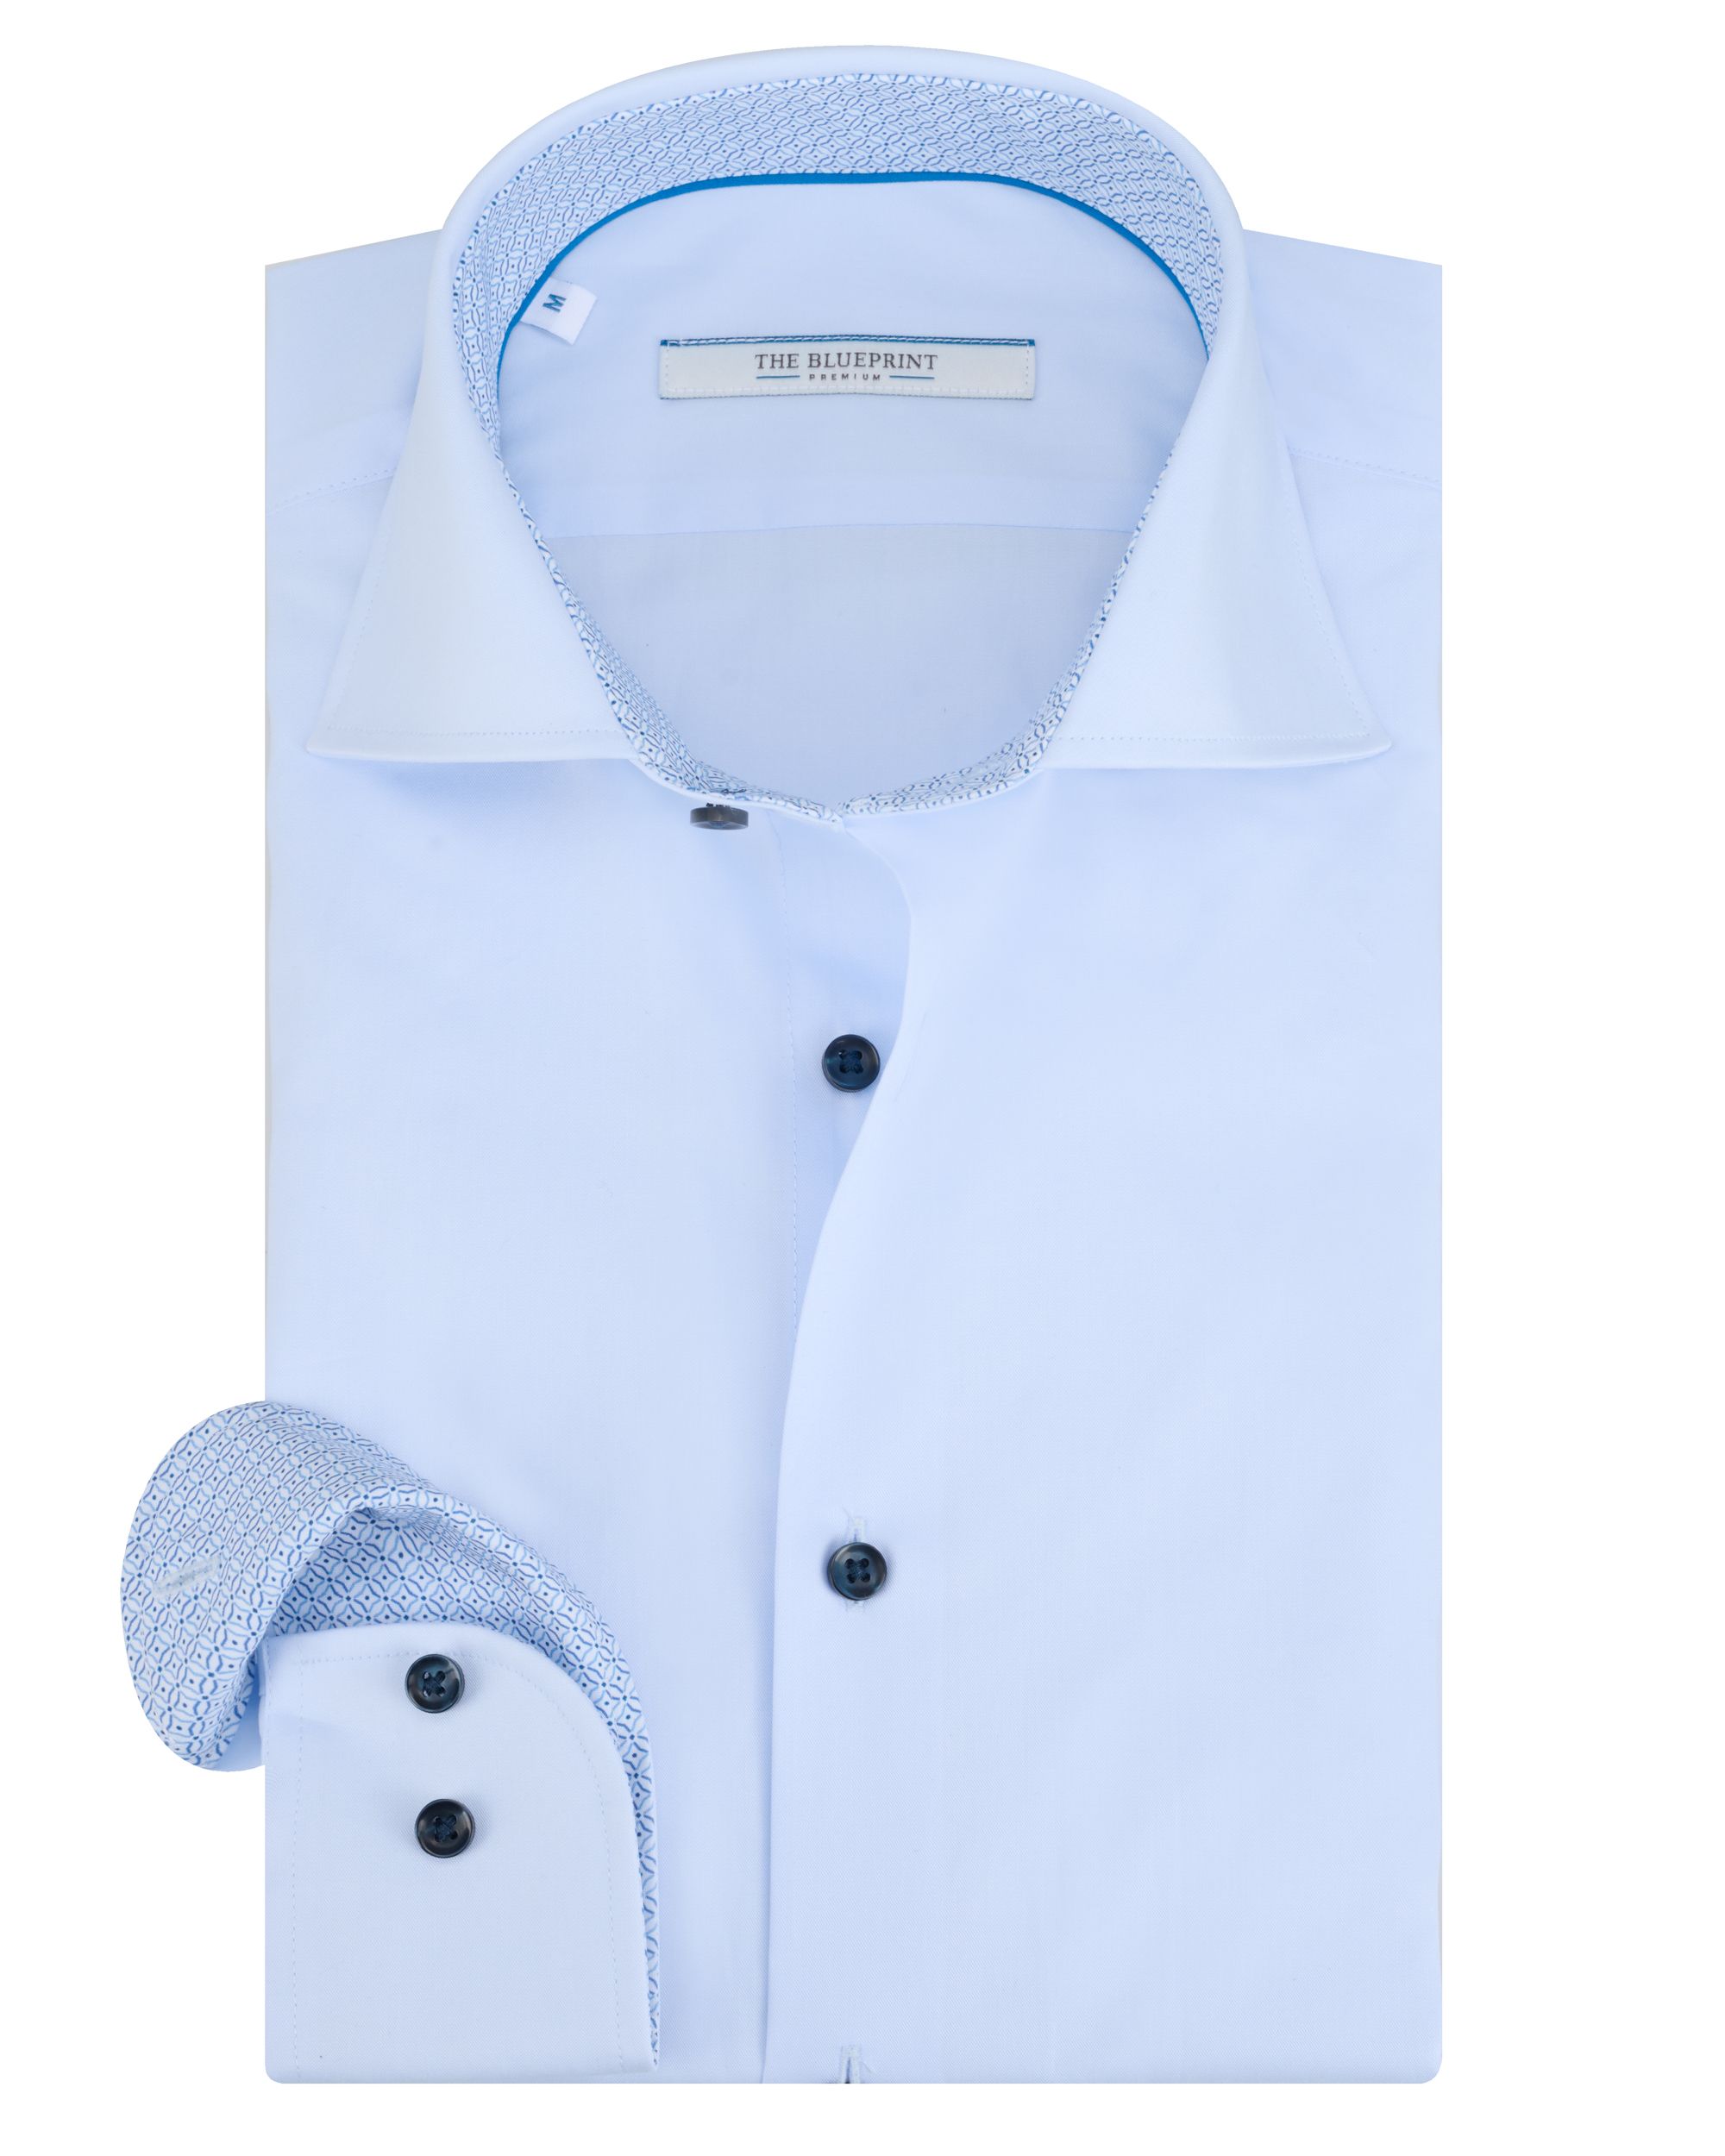 The BLUEPRINT Premium -Trendy Overhemd LM L.BLUE 092066-001-L